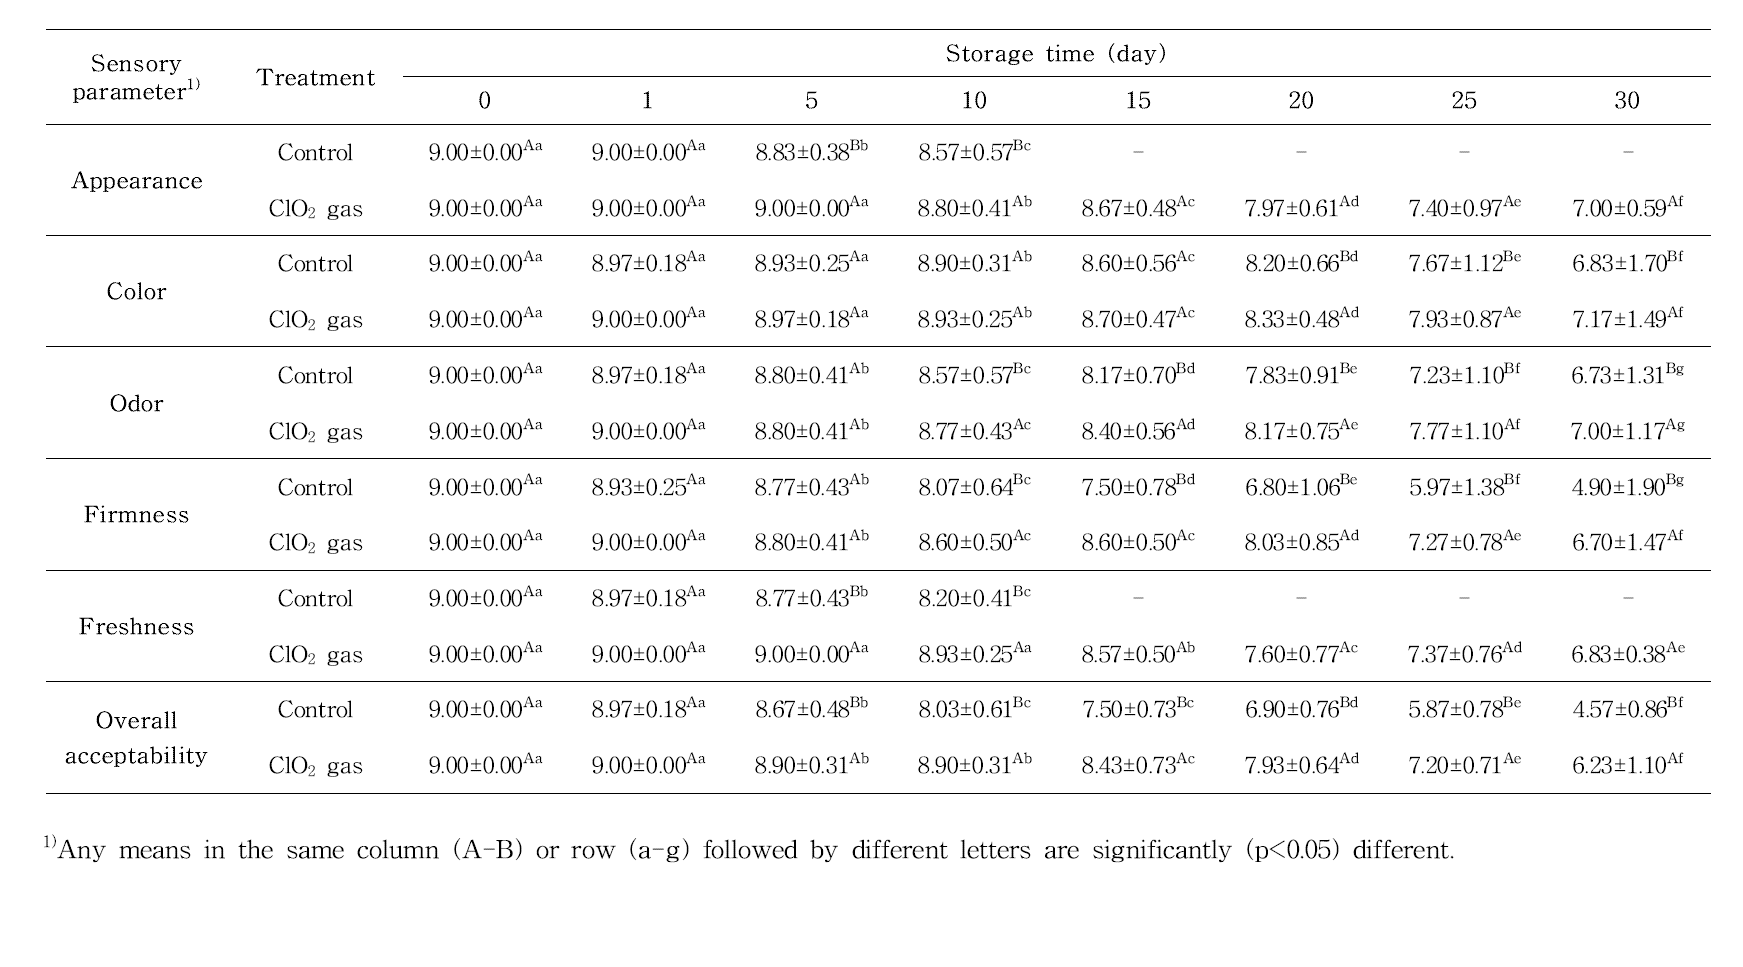 Sensory evaluation in paprika during storage at 8°C, RH 90%